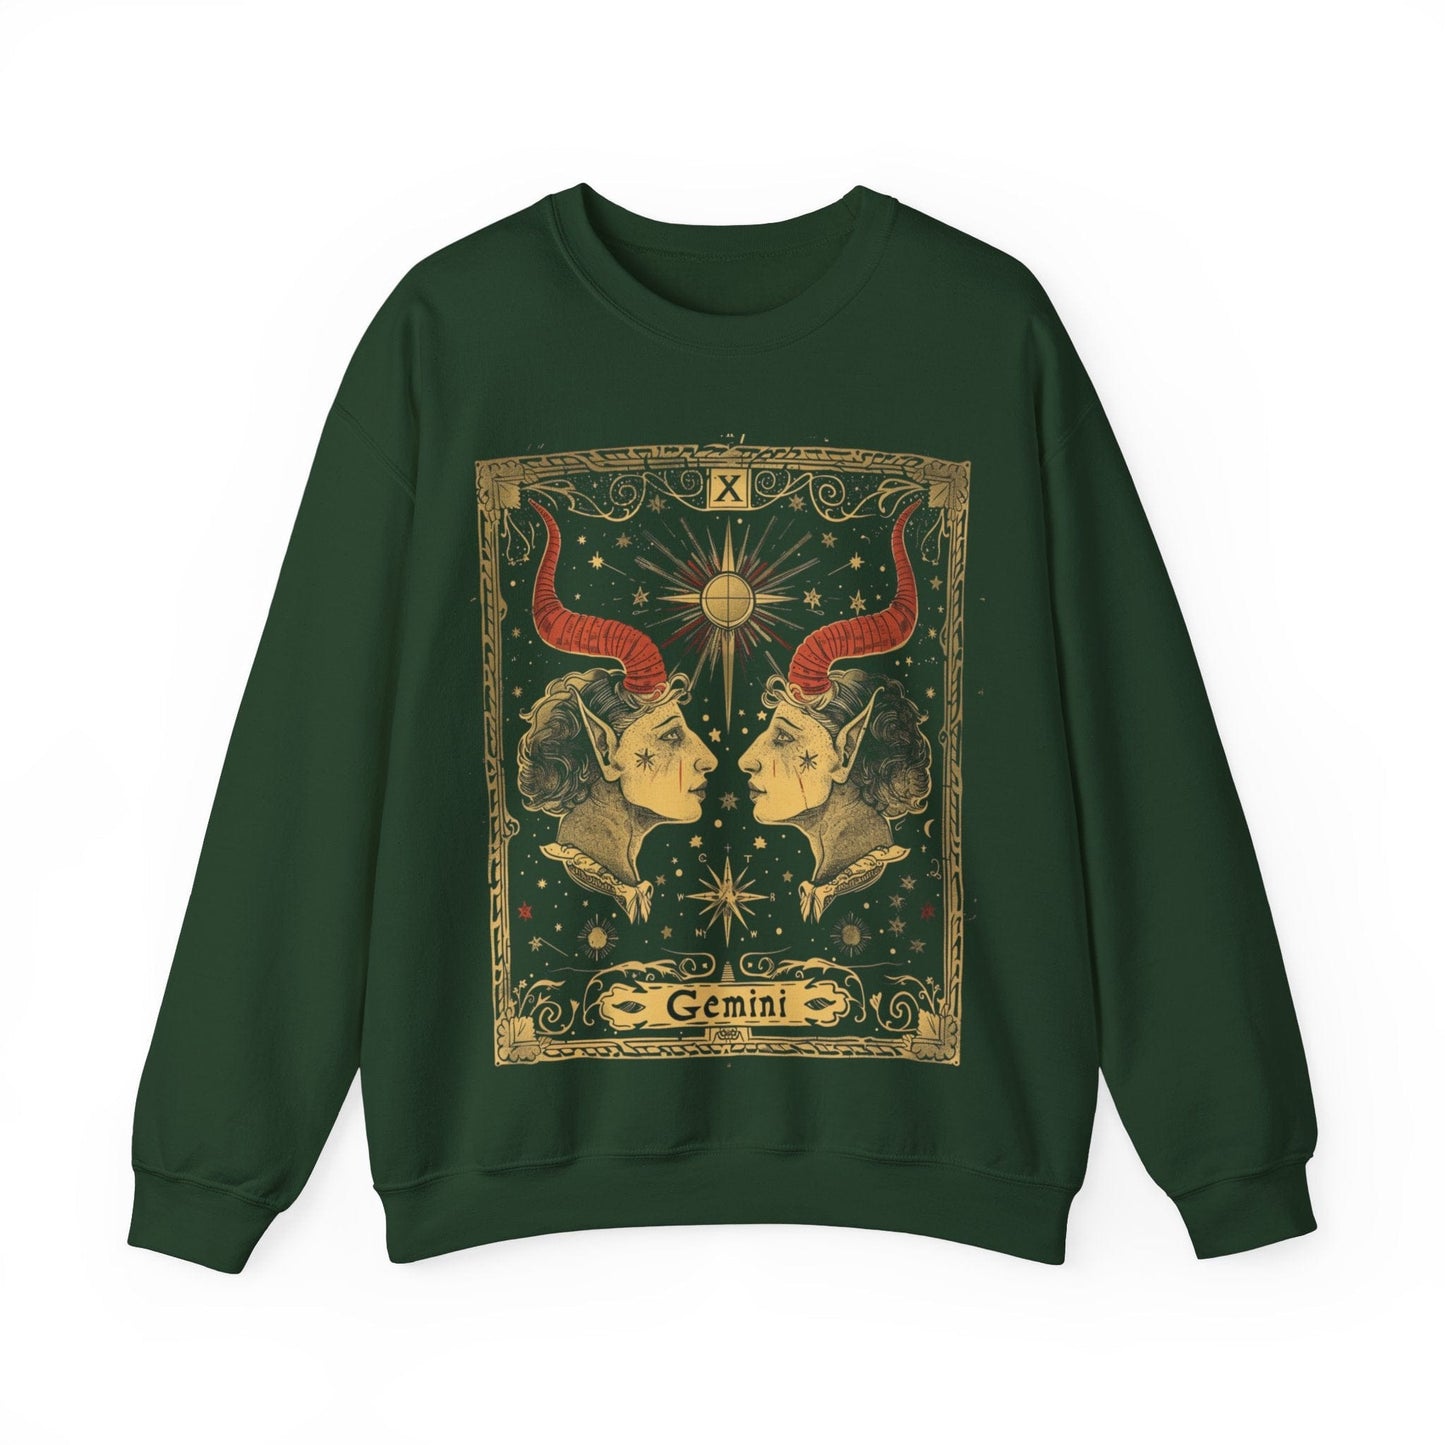 Sweatshirt S / Forest Green Celestial Duet Gemini Sweater: Harmonized Contrasts